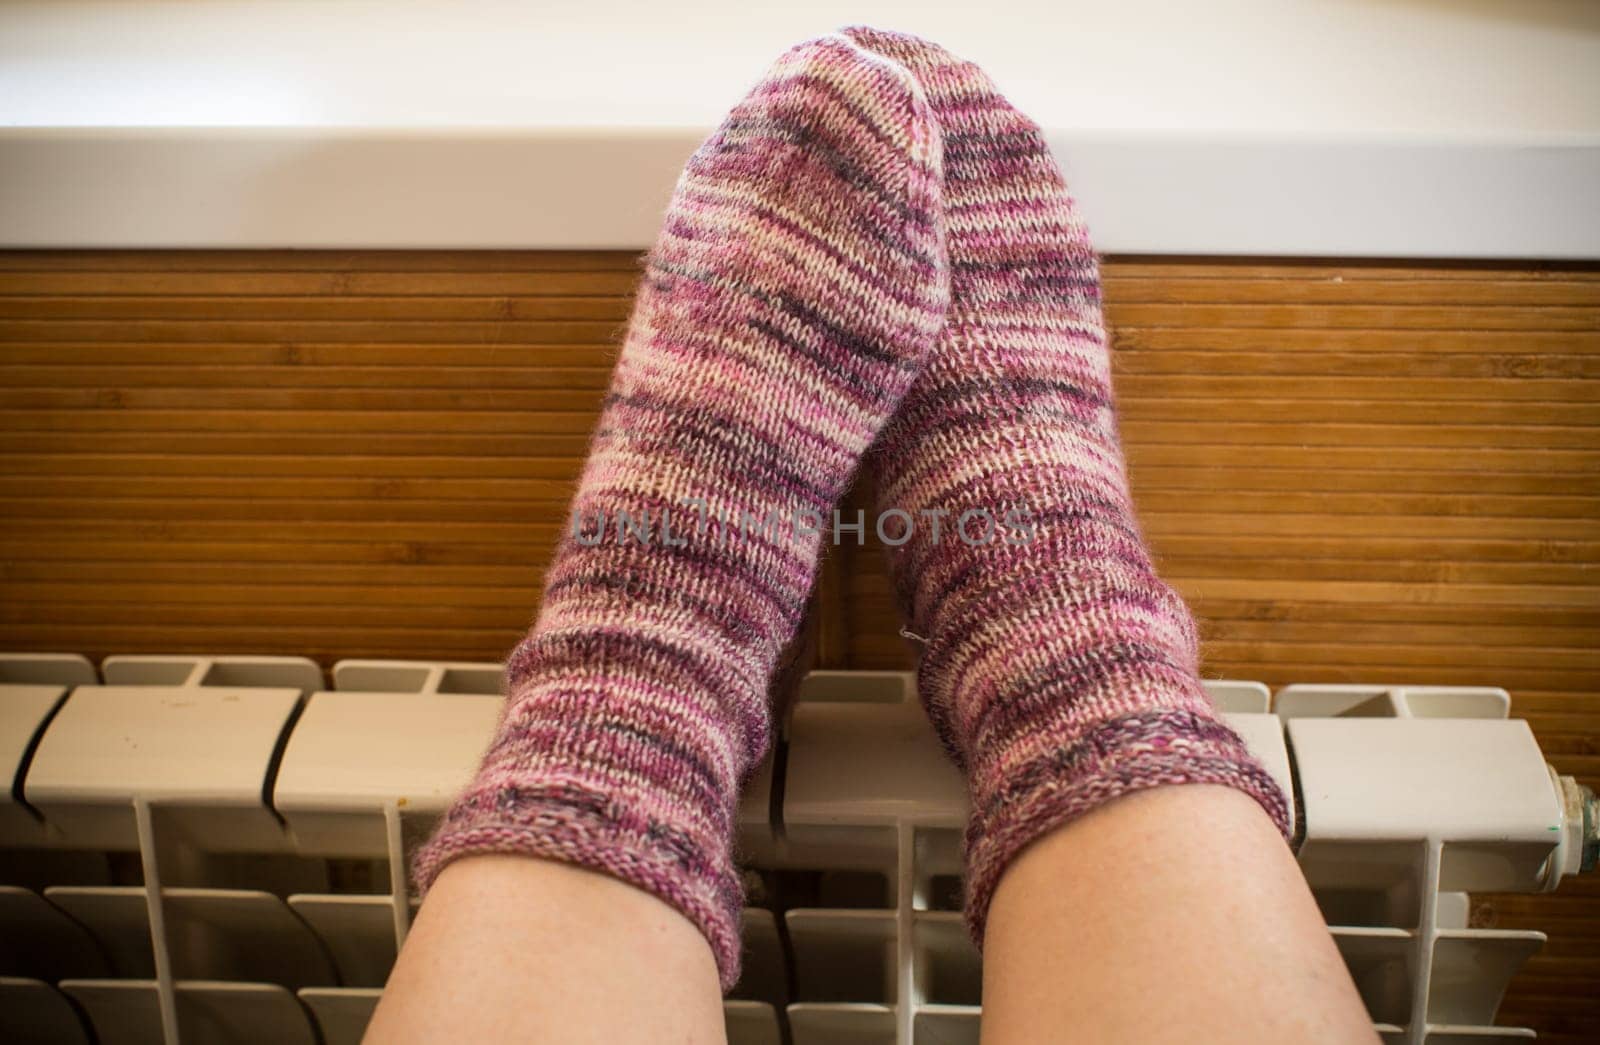 Feet in warm winter socks warm up on the radiator. by Rawlik